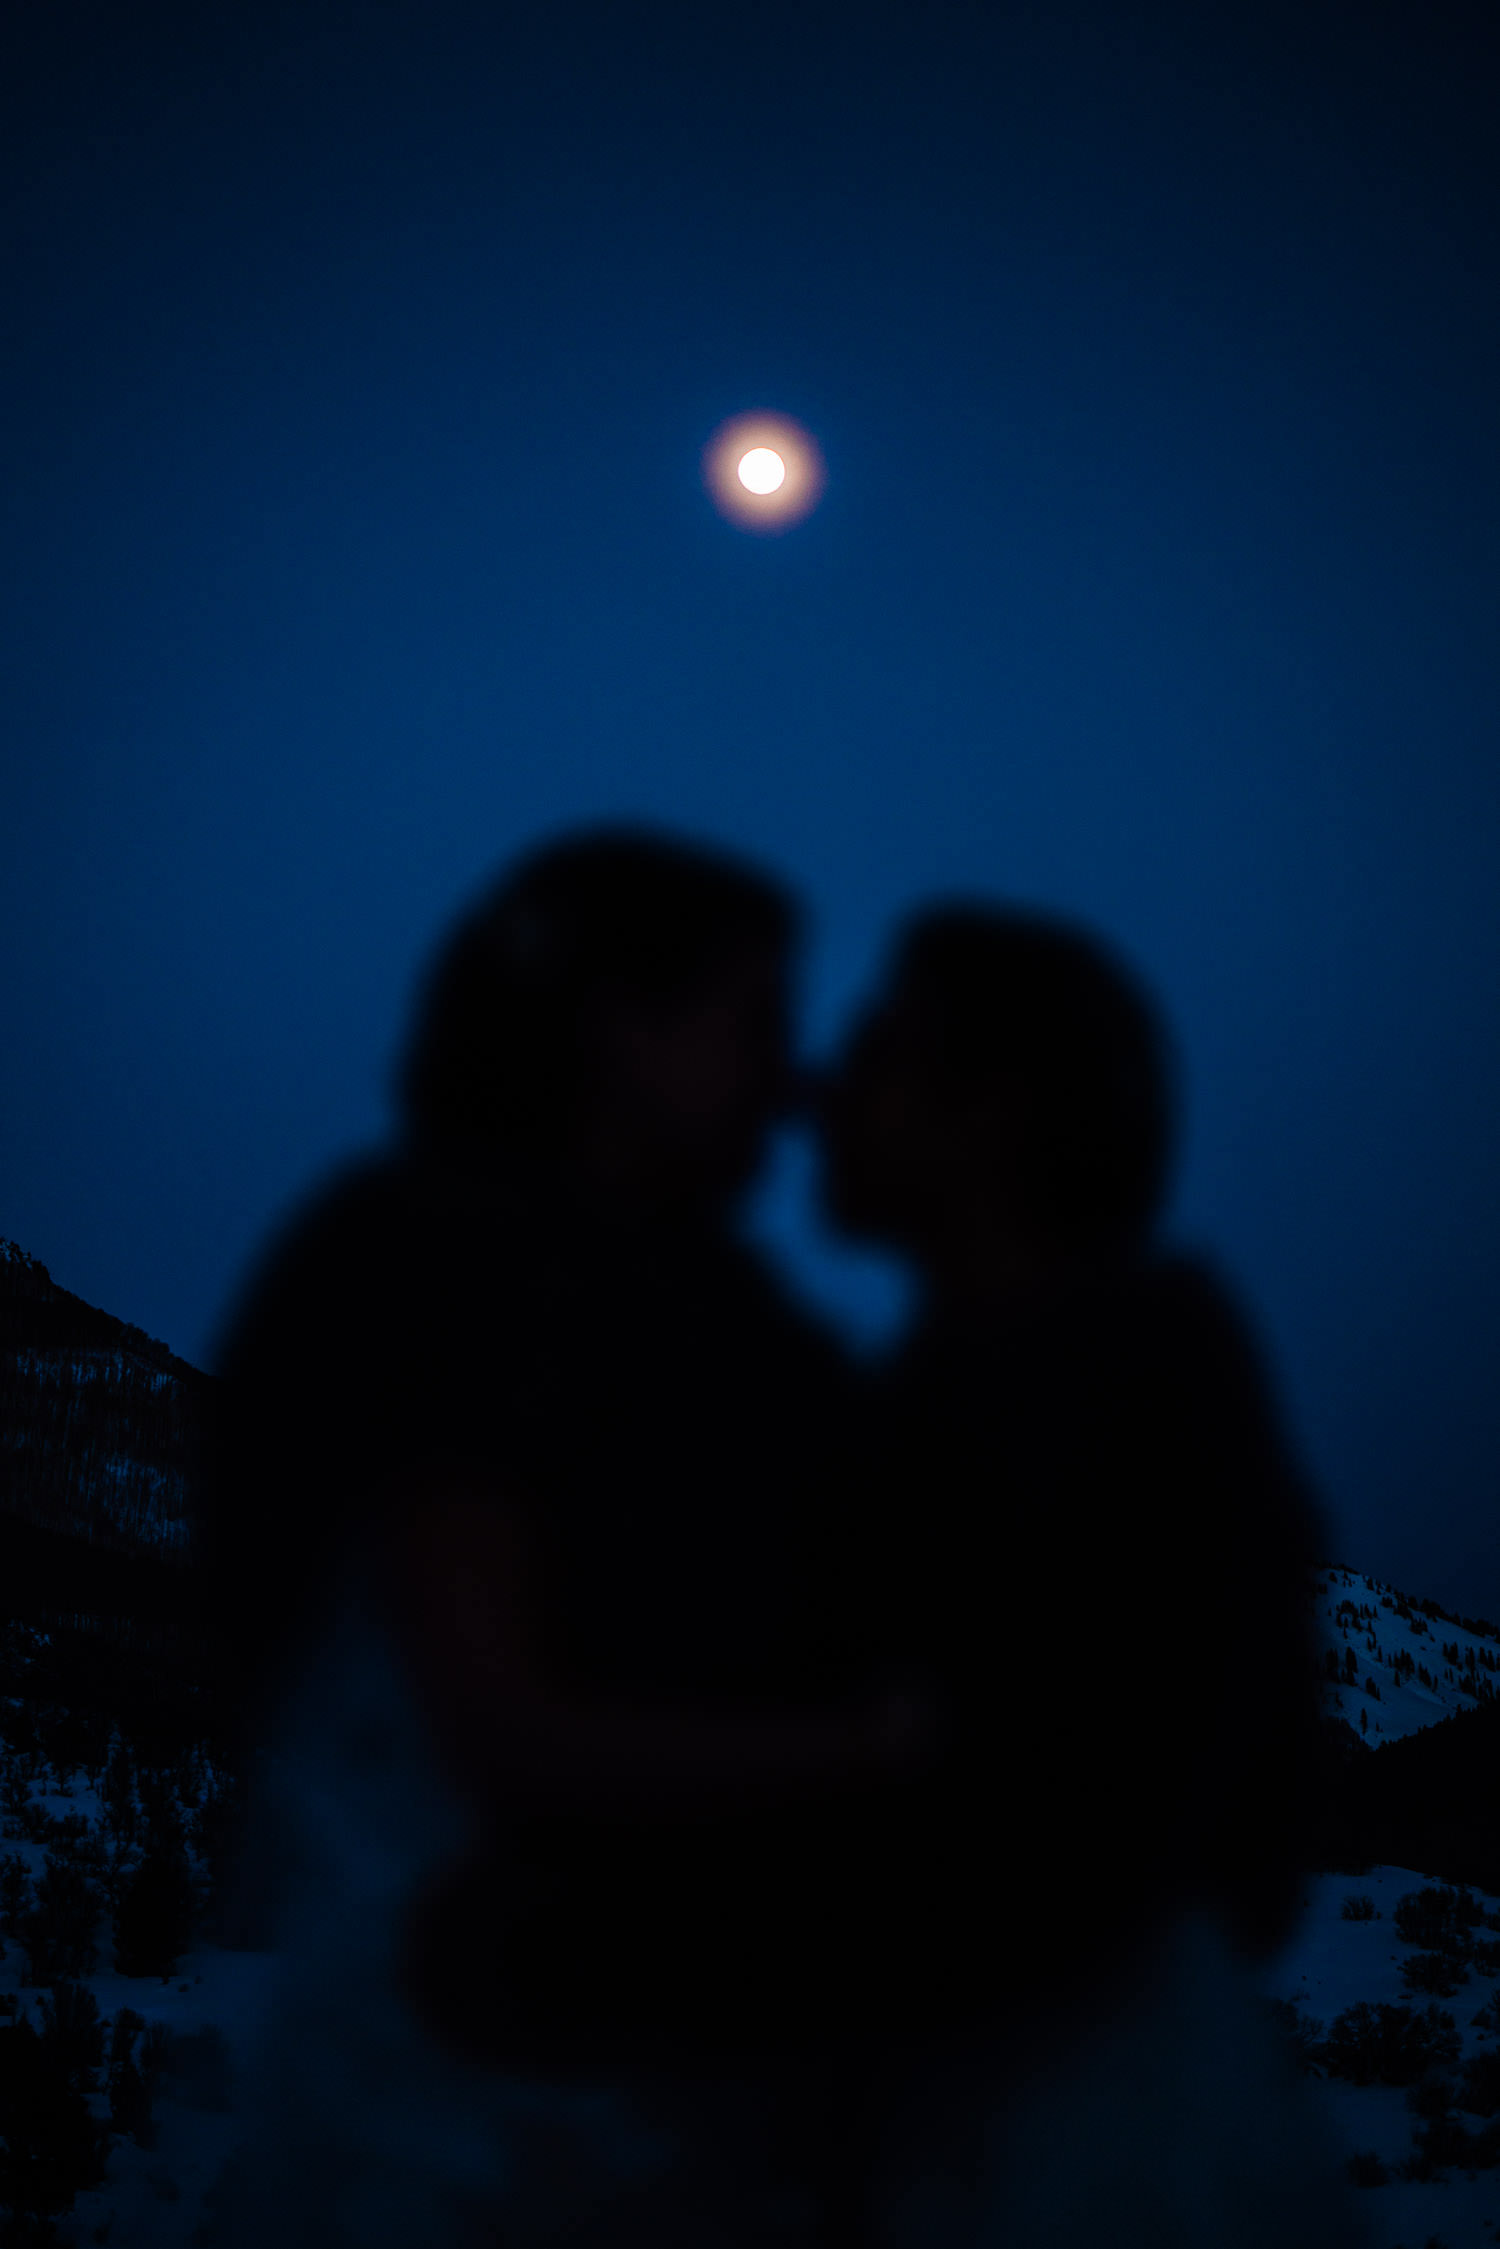 Newlywed lesbians beneath a full moon